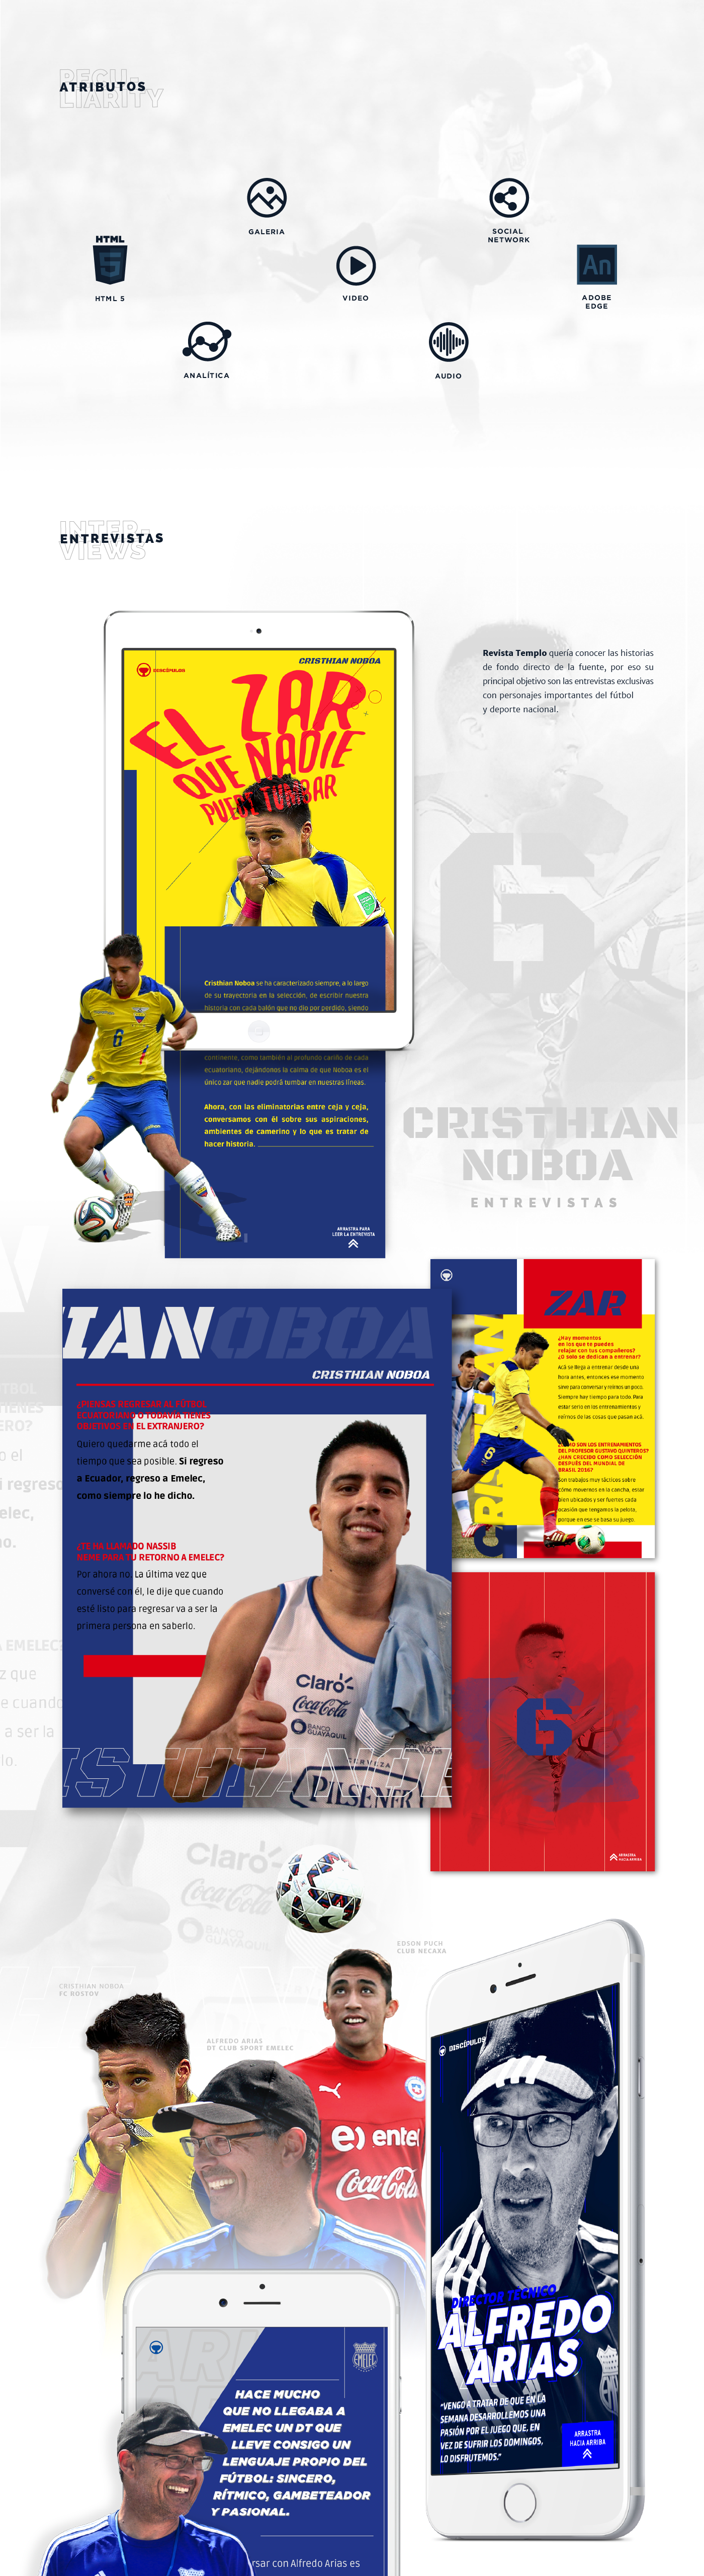 app Digital Magazine templo soccer Ecuador sports Futbol Deportes revista